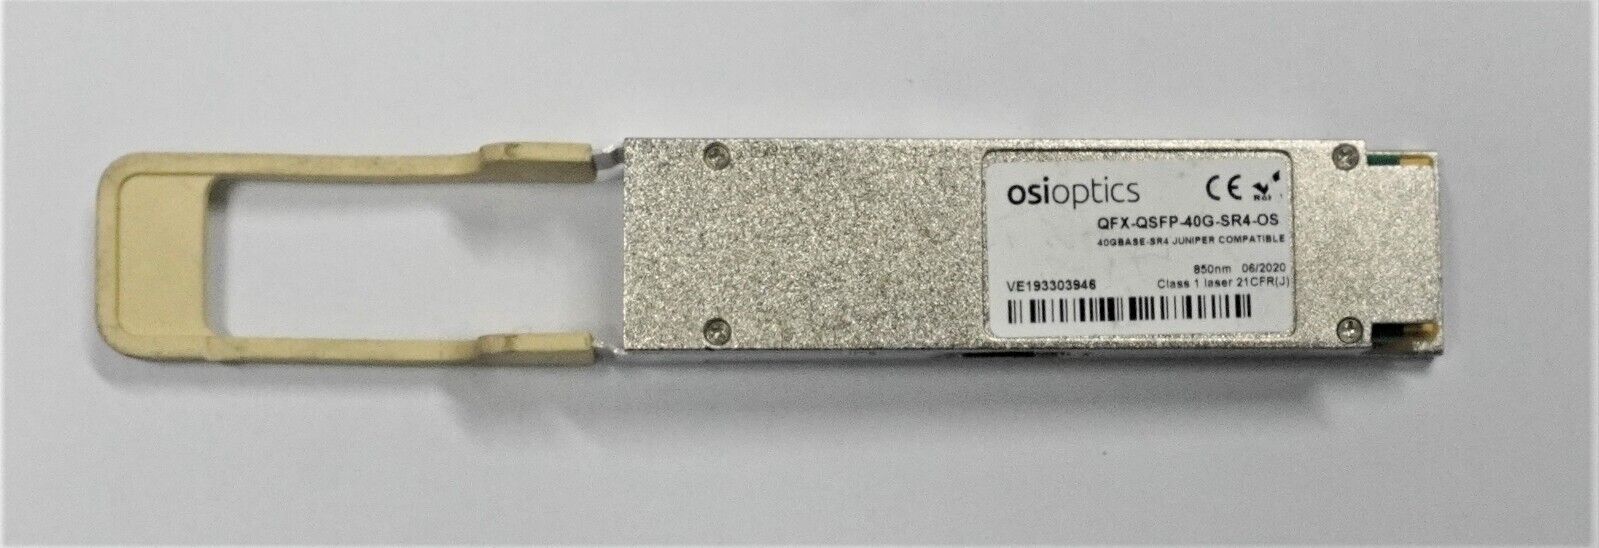 OSI | QFX-QSFP-40G-SR4-OSI | 40GBASE-SR4 650nm Transceiver Module